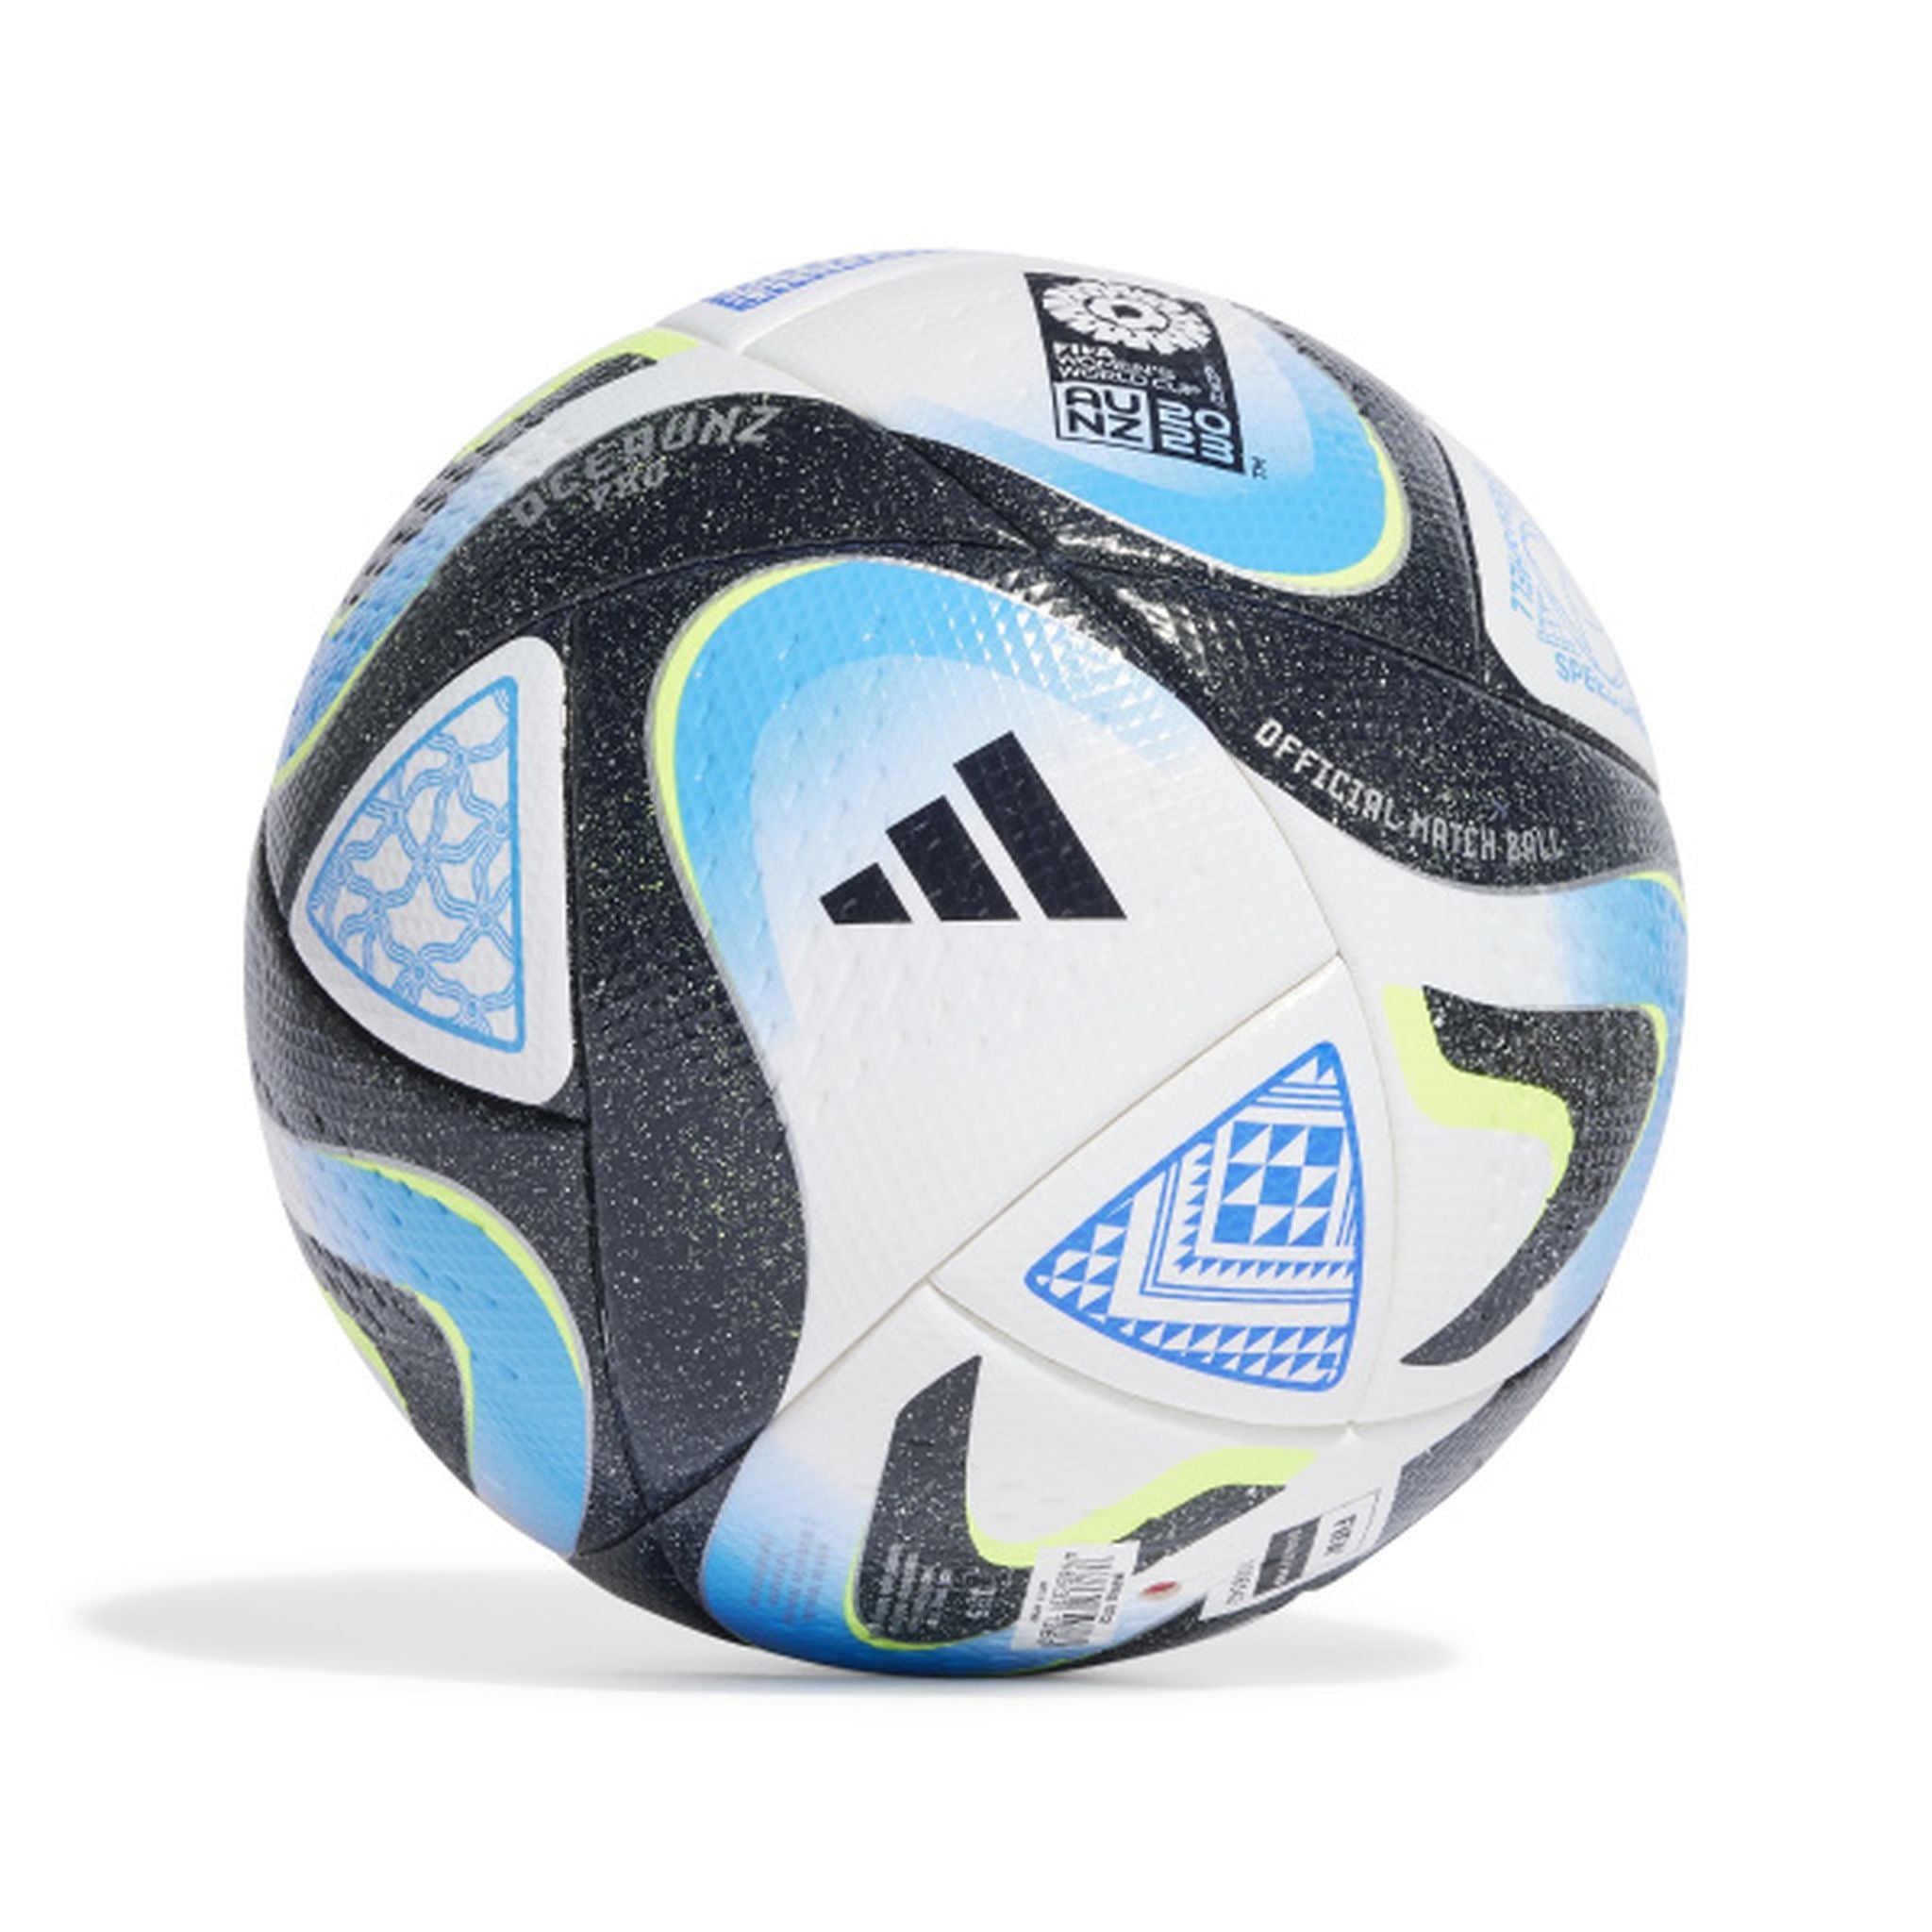 Adidas Womens World Cup Pro Soccer Ball